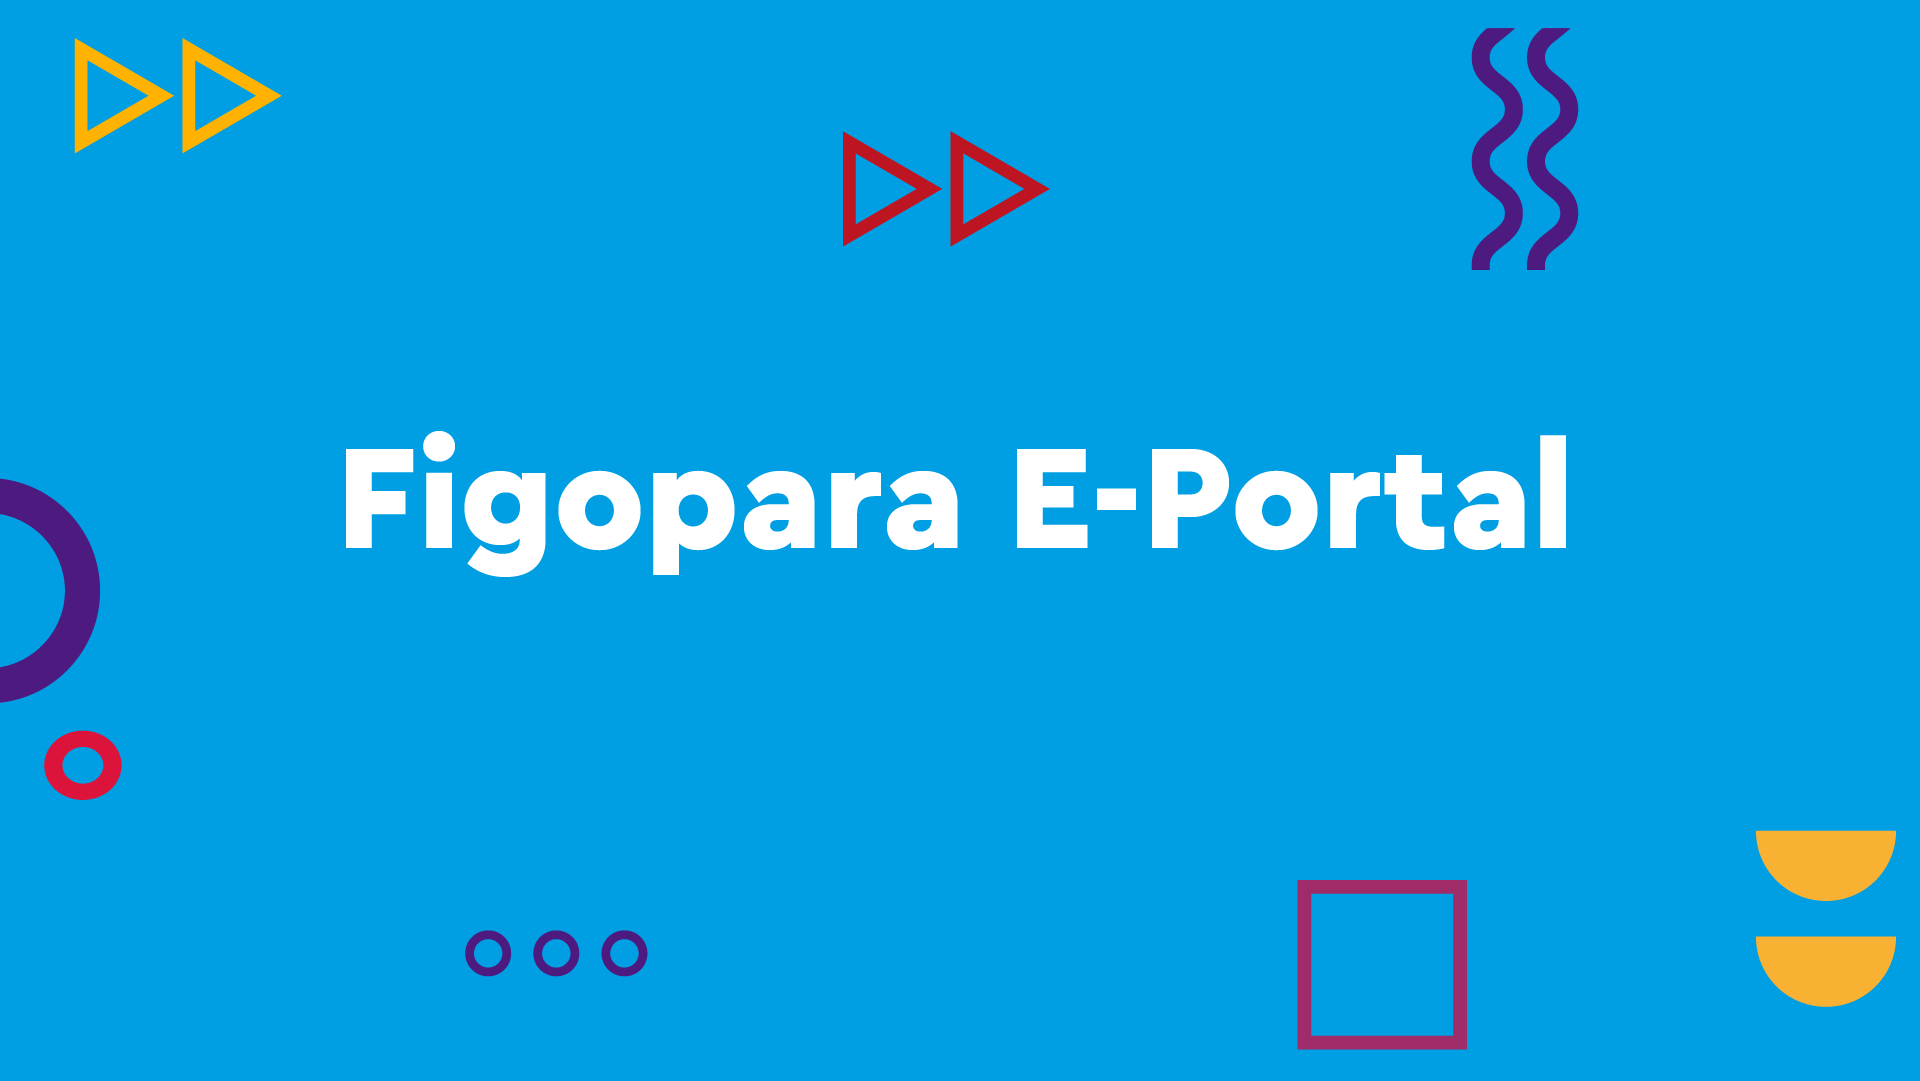 Figopara E-Portal